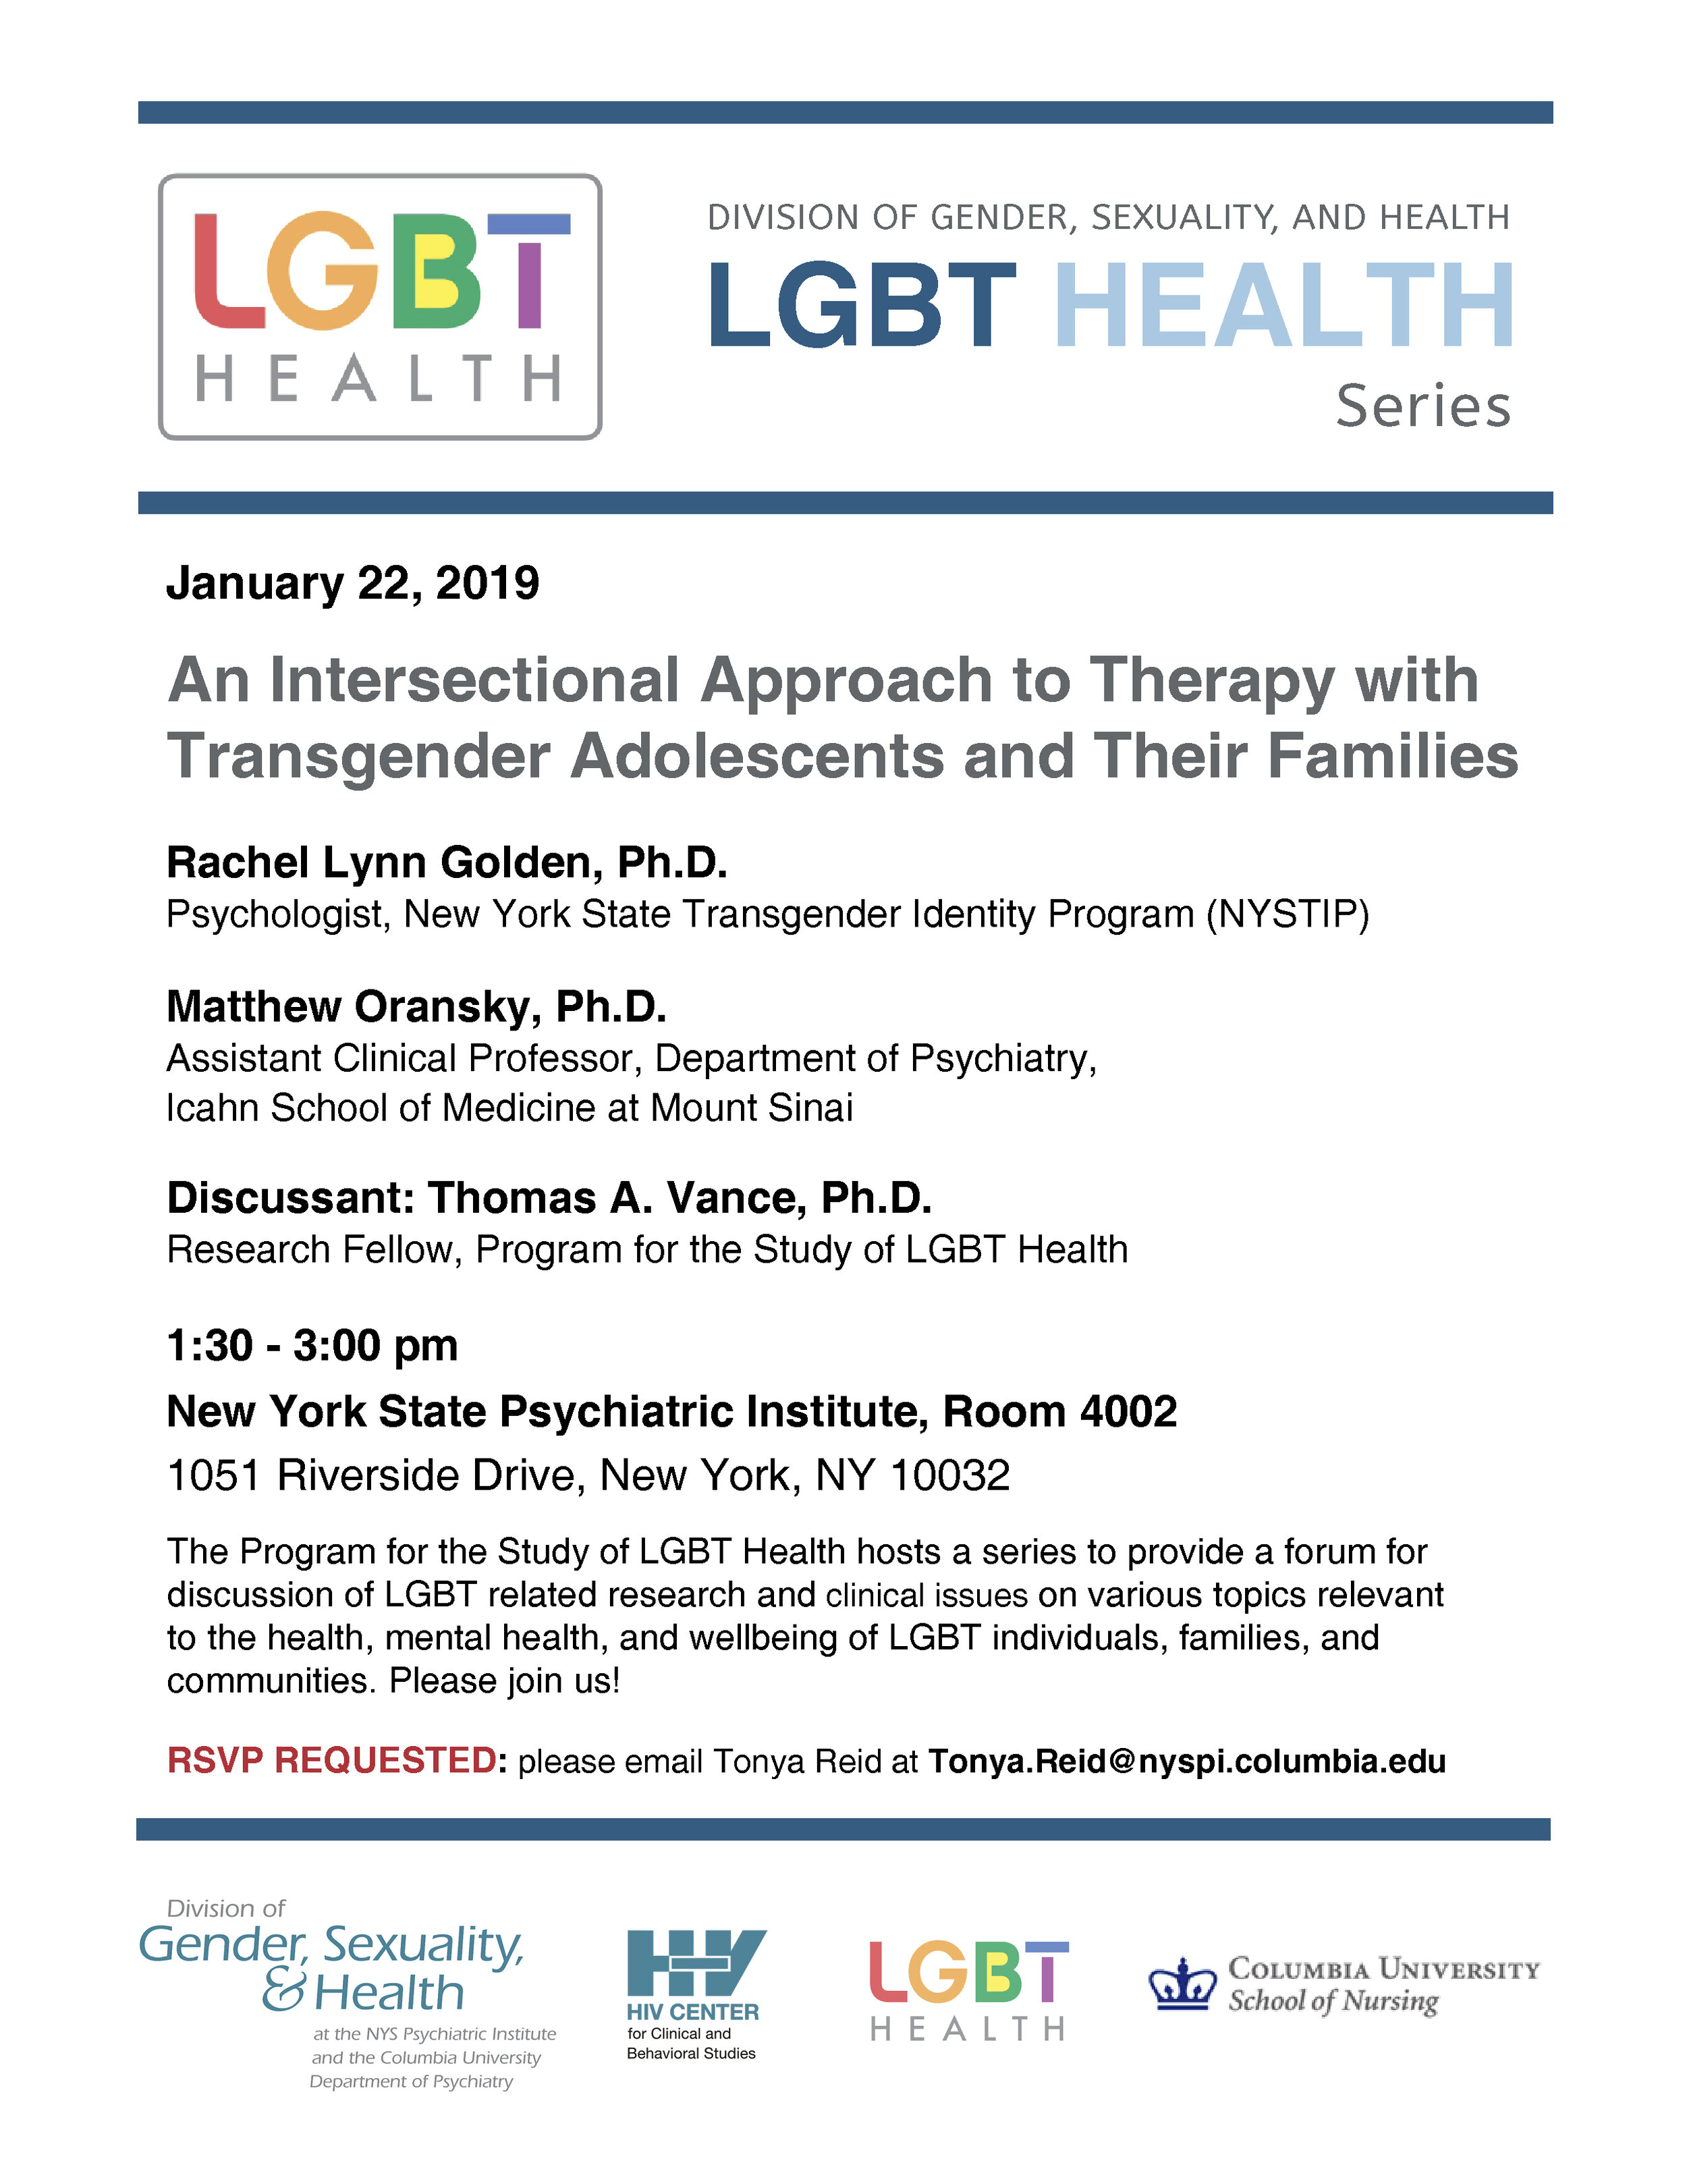 LGBT Health Series Jan 22 2019.jpg